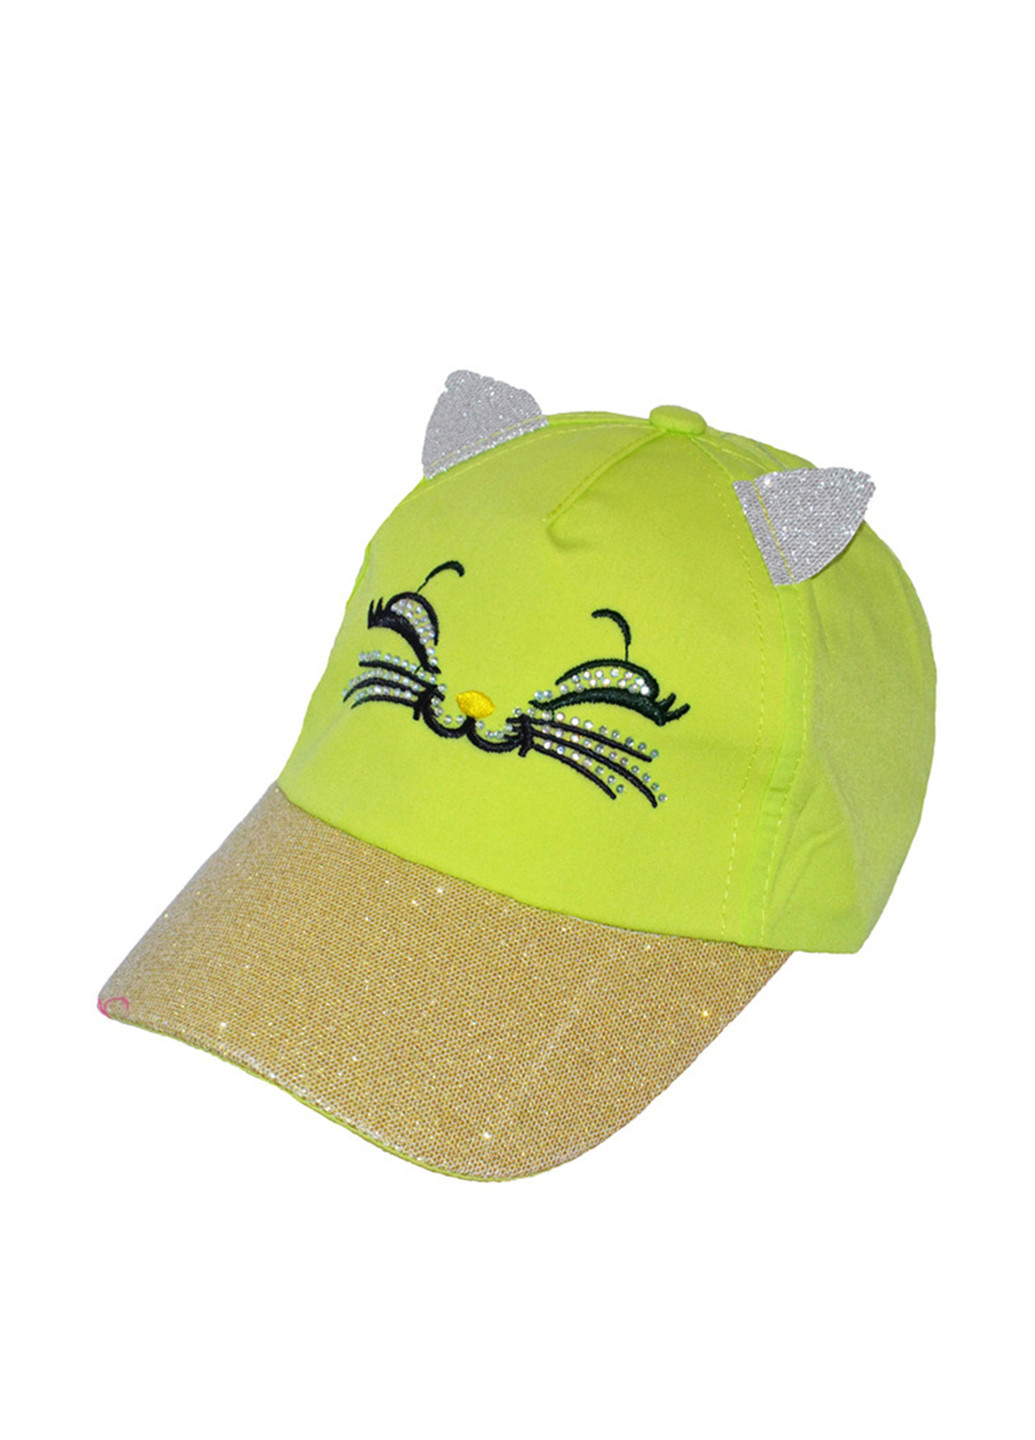 Кепка Sweet Hats кошки салатовая кэжуал